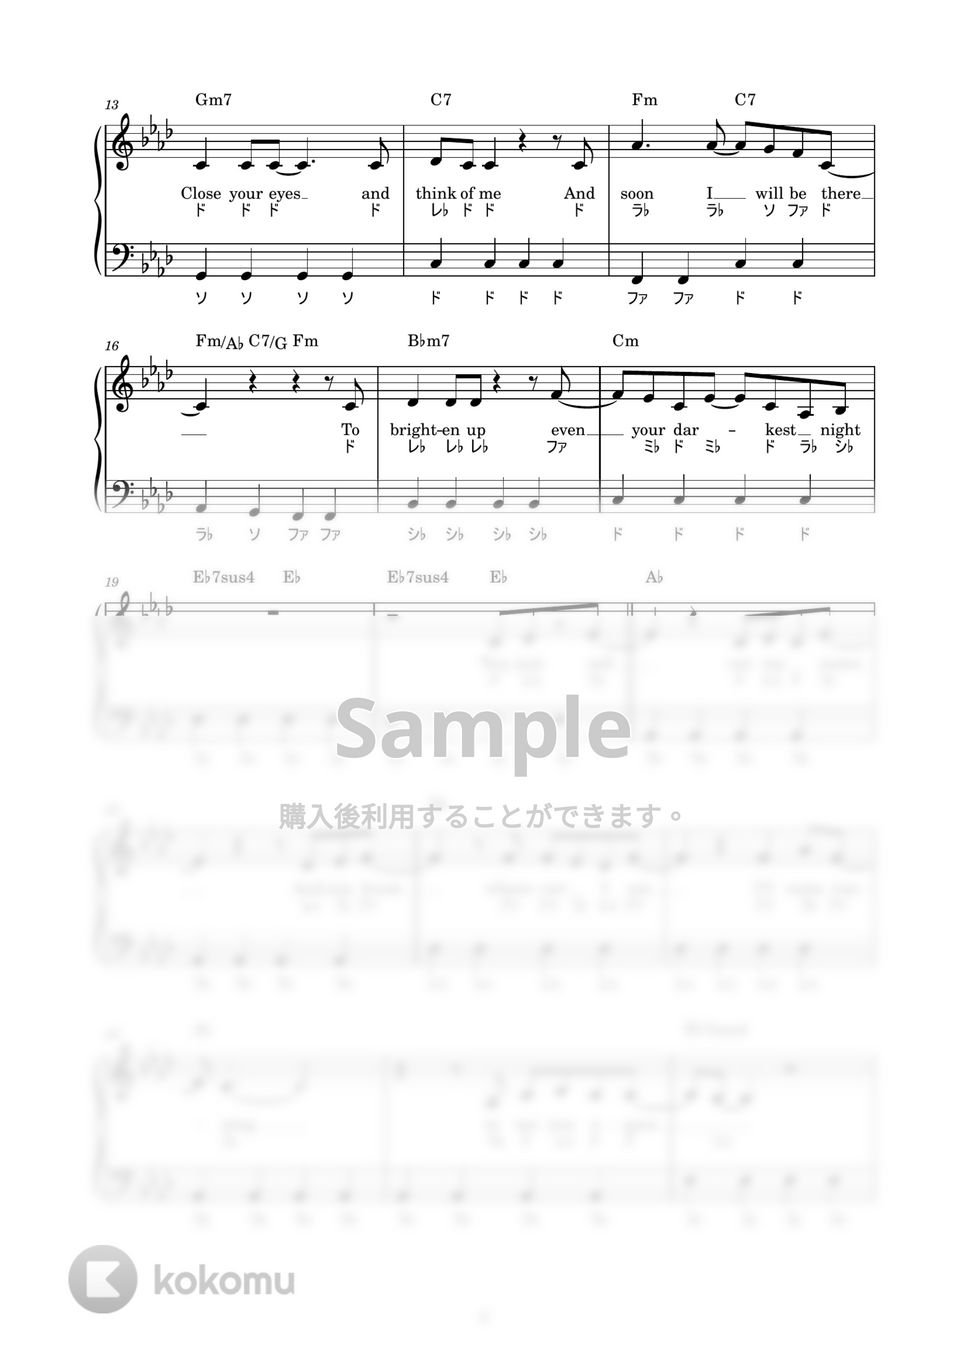 Carole King - You've Got A Friend (かんたん / 歌詞付き / ドレミ付き / 初心者) by piano.tokyo